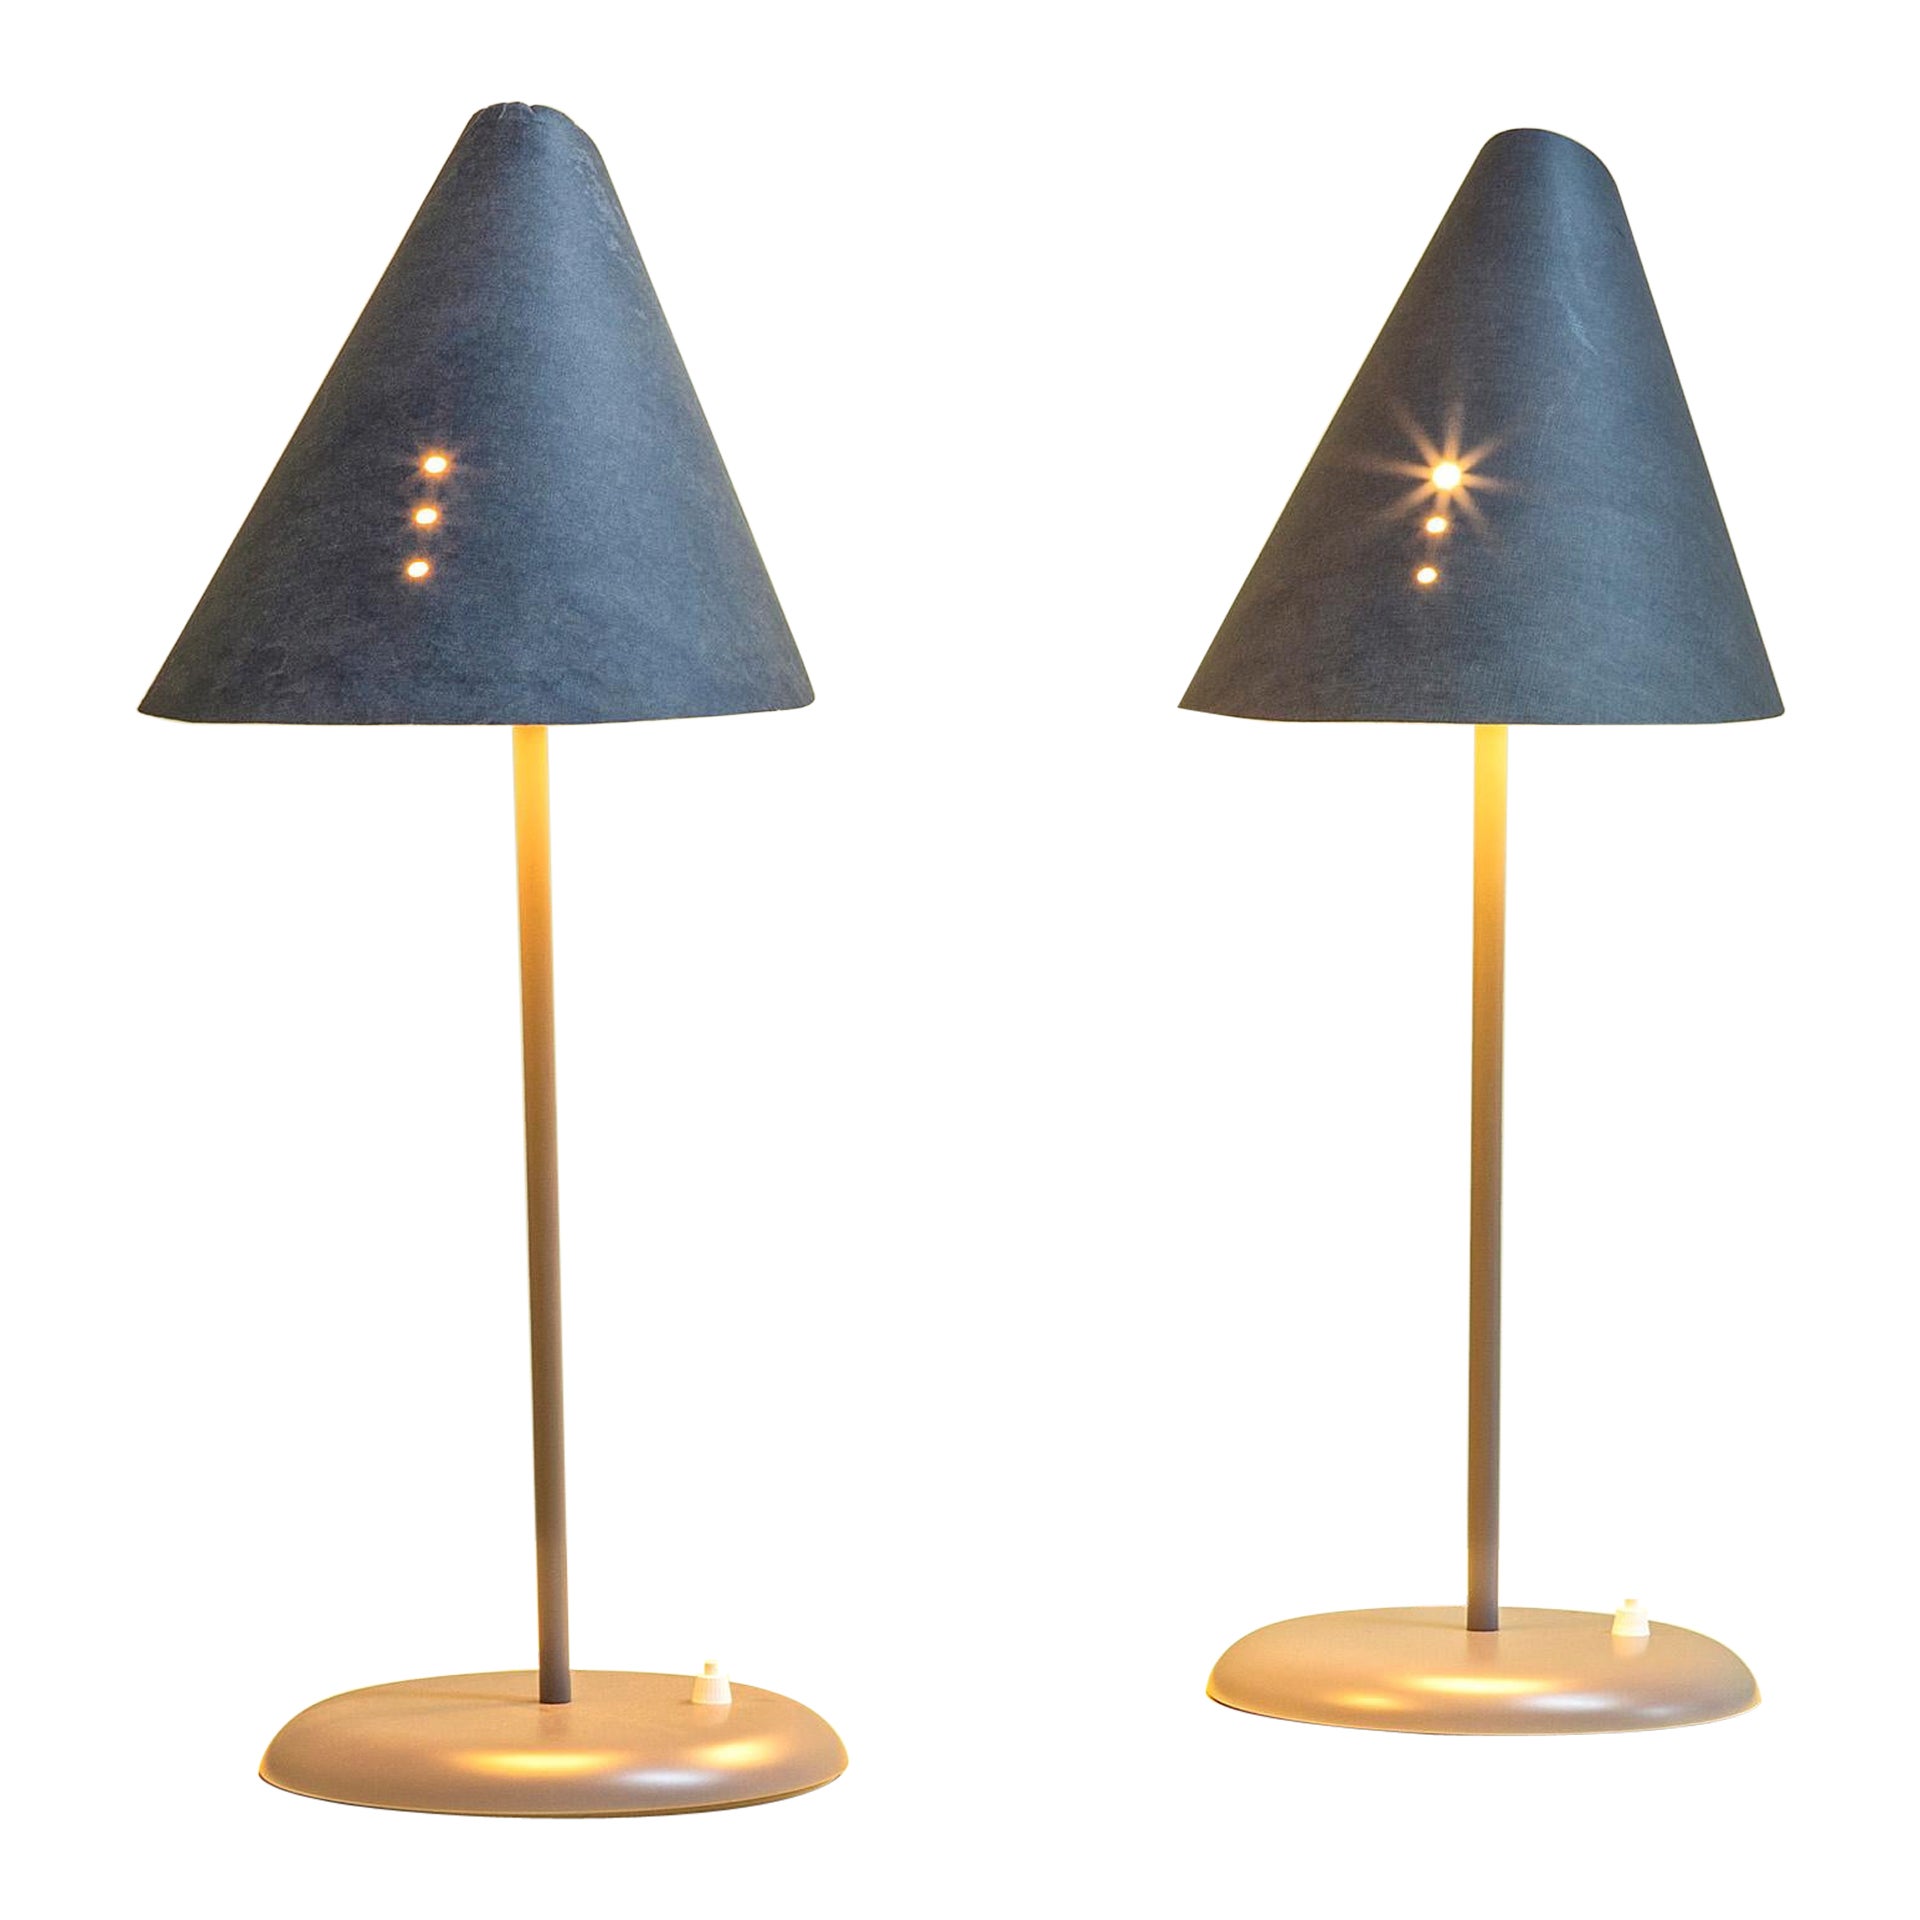 Paar Tischlampen mod. La lune sous le chapeau, Man Ray für Gavina, 20. Jahrhundert